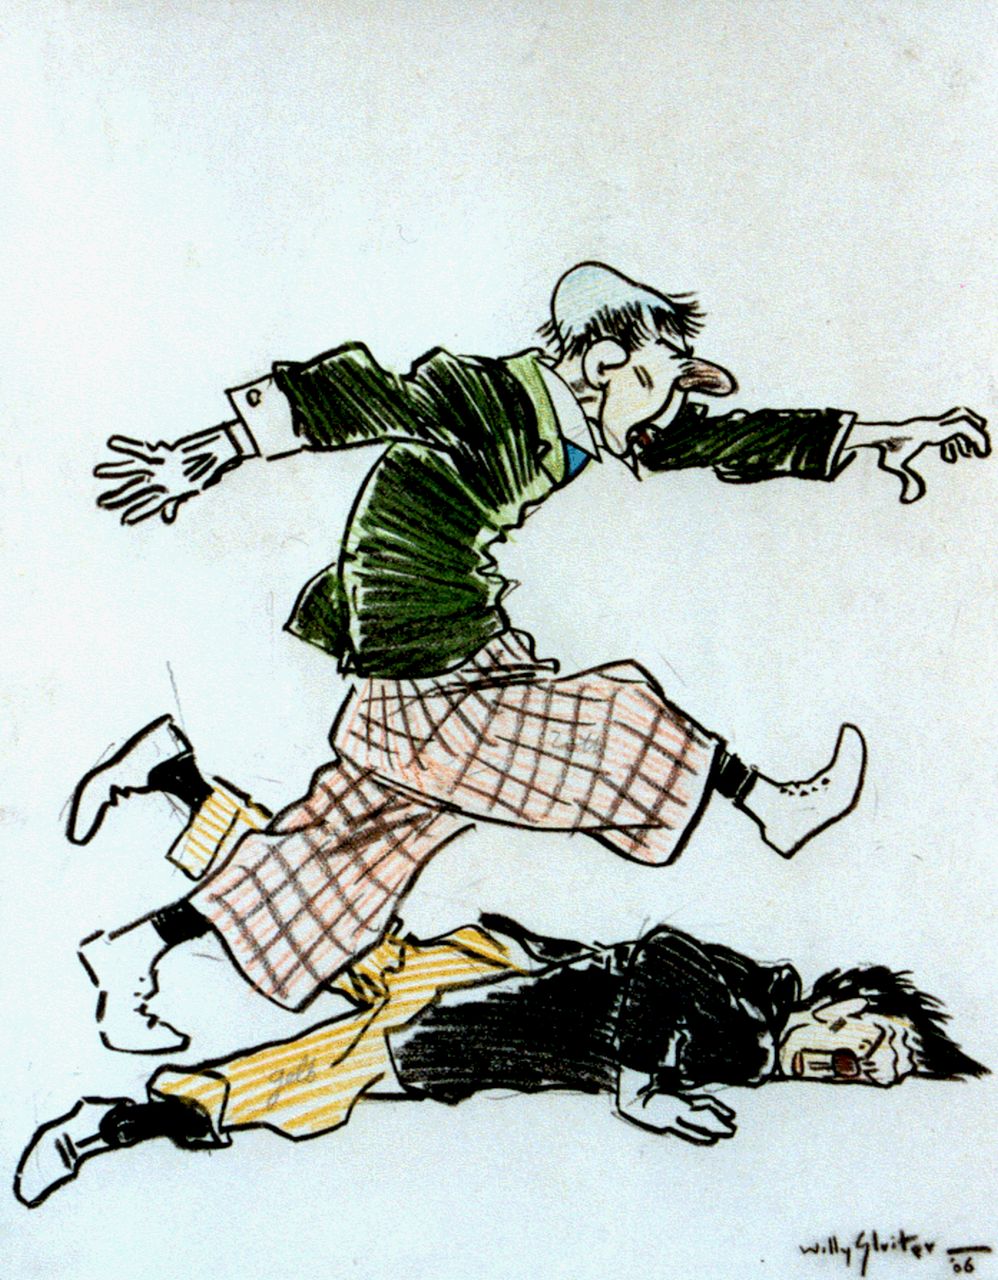 Sluiter J.W.  | Jan Willem 'Willy' Sluiter, Rennende en liggende clown, krijt op papier 23,0 x 18,0 cm, gesigneerd rechtsonder en gedateerd '06